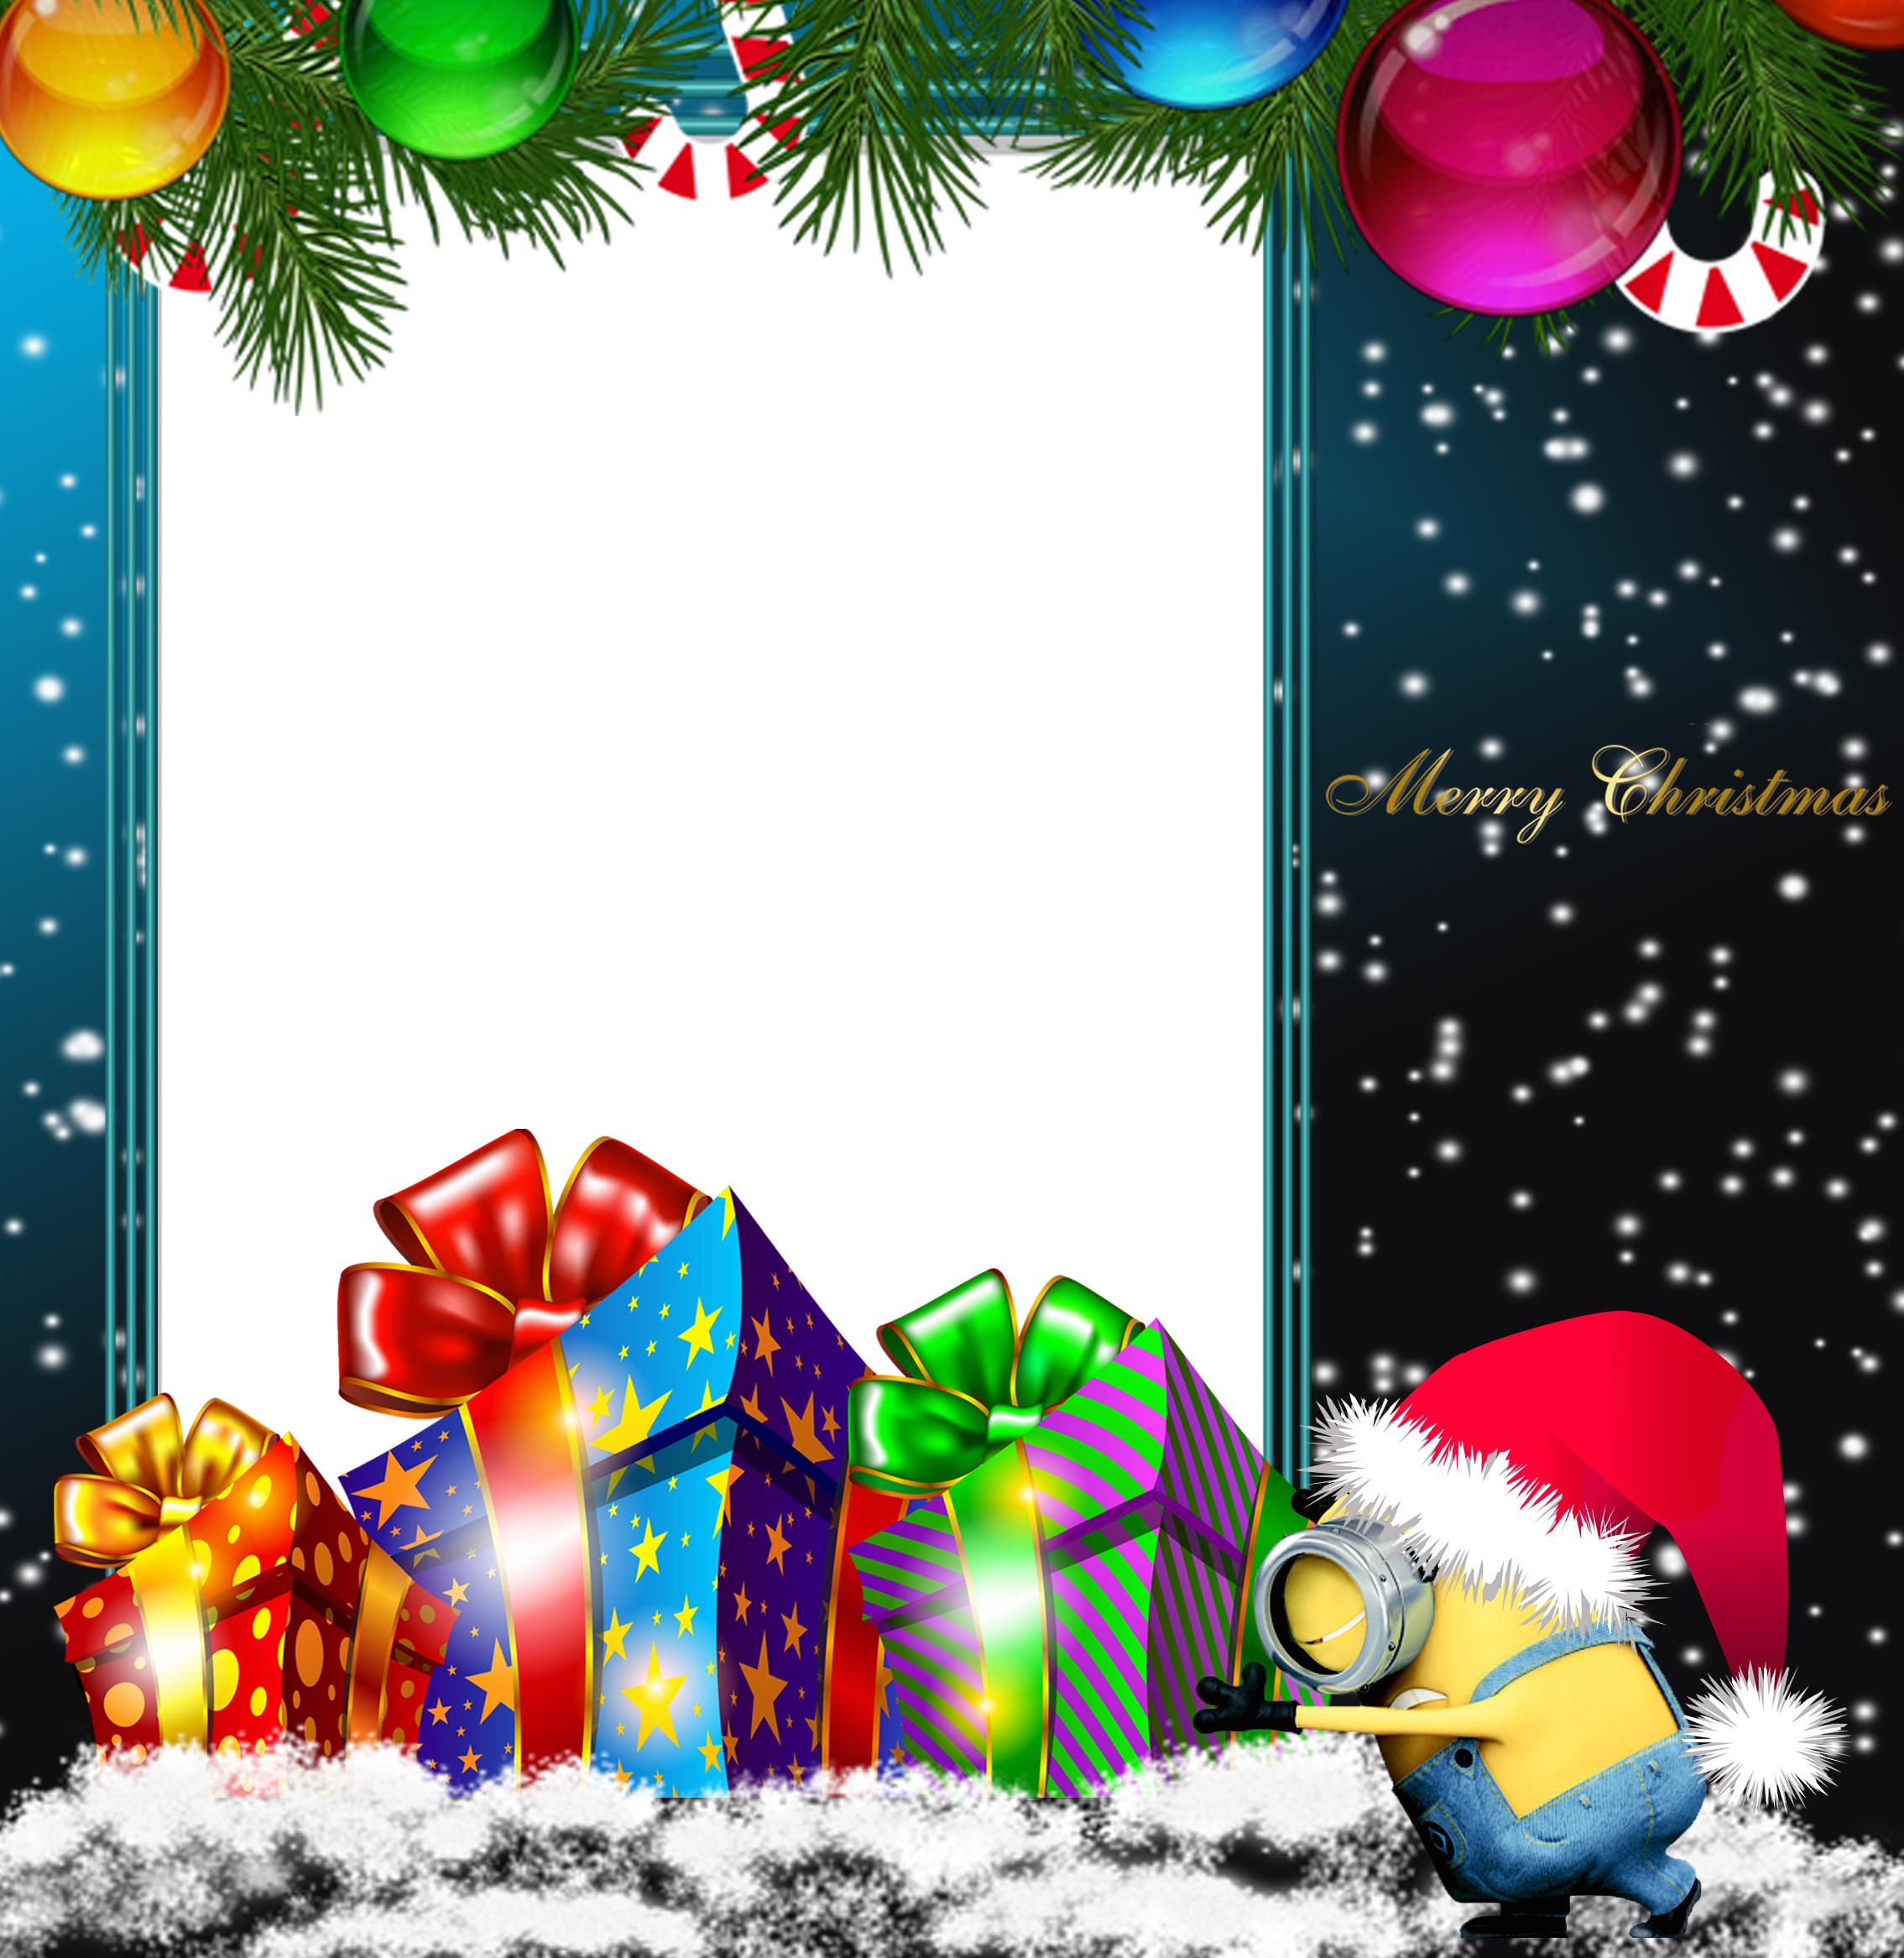 Xmas Stuff For > Minions Christmas Wallpaper. Minion christmas, Christmas picture frames, Christmas boarders